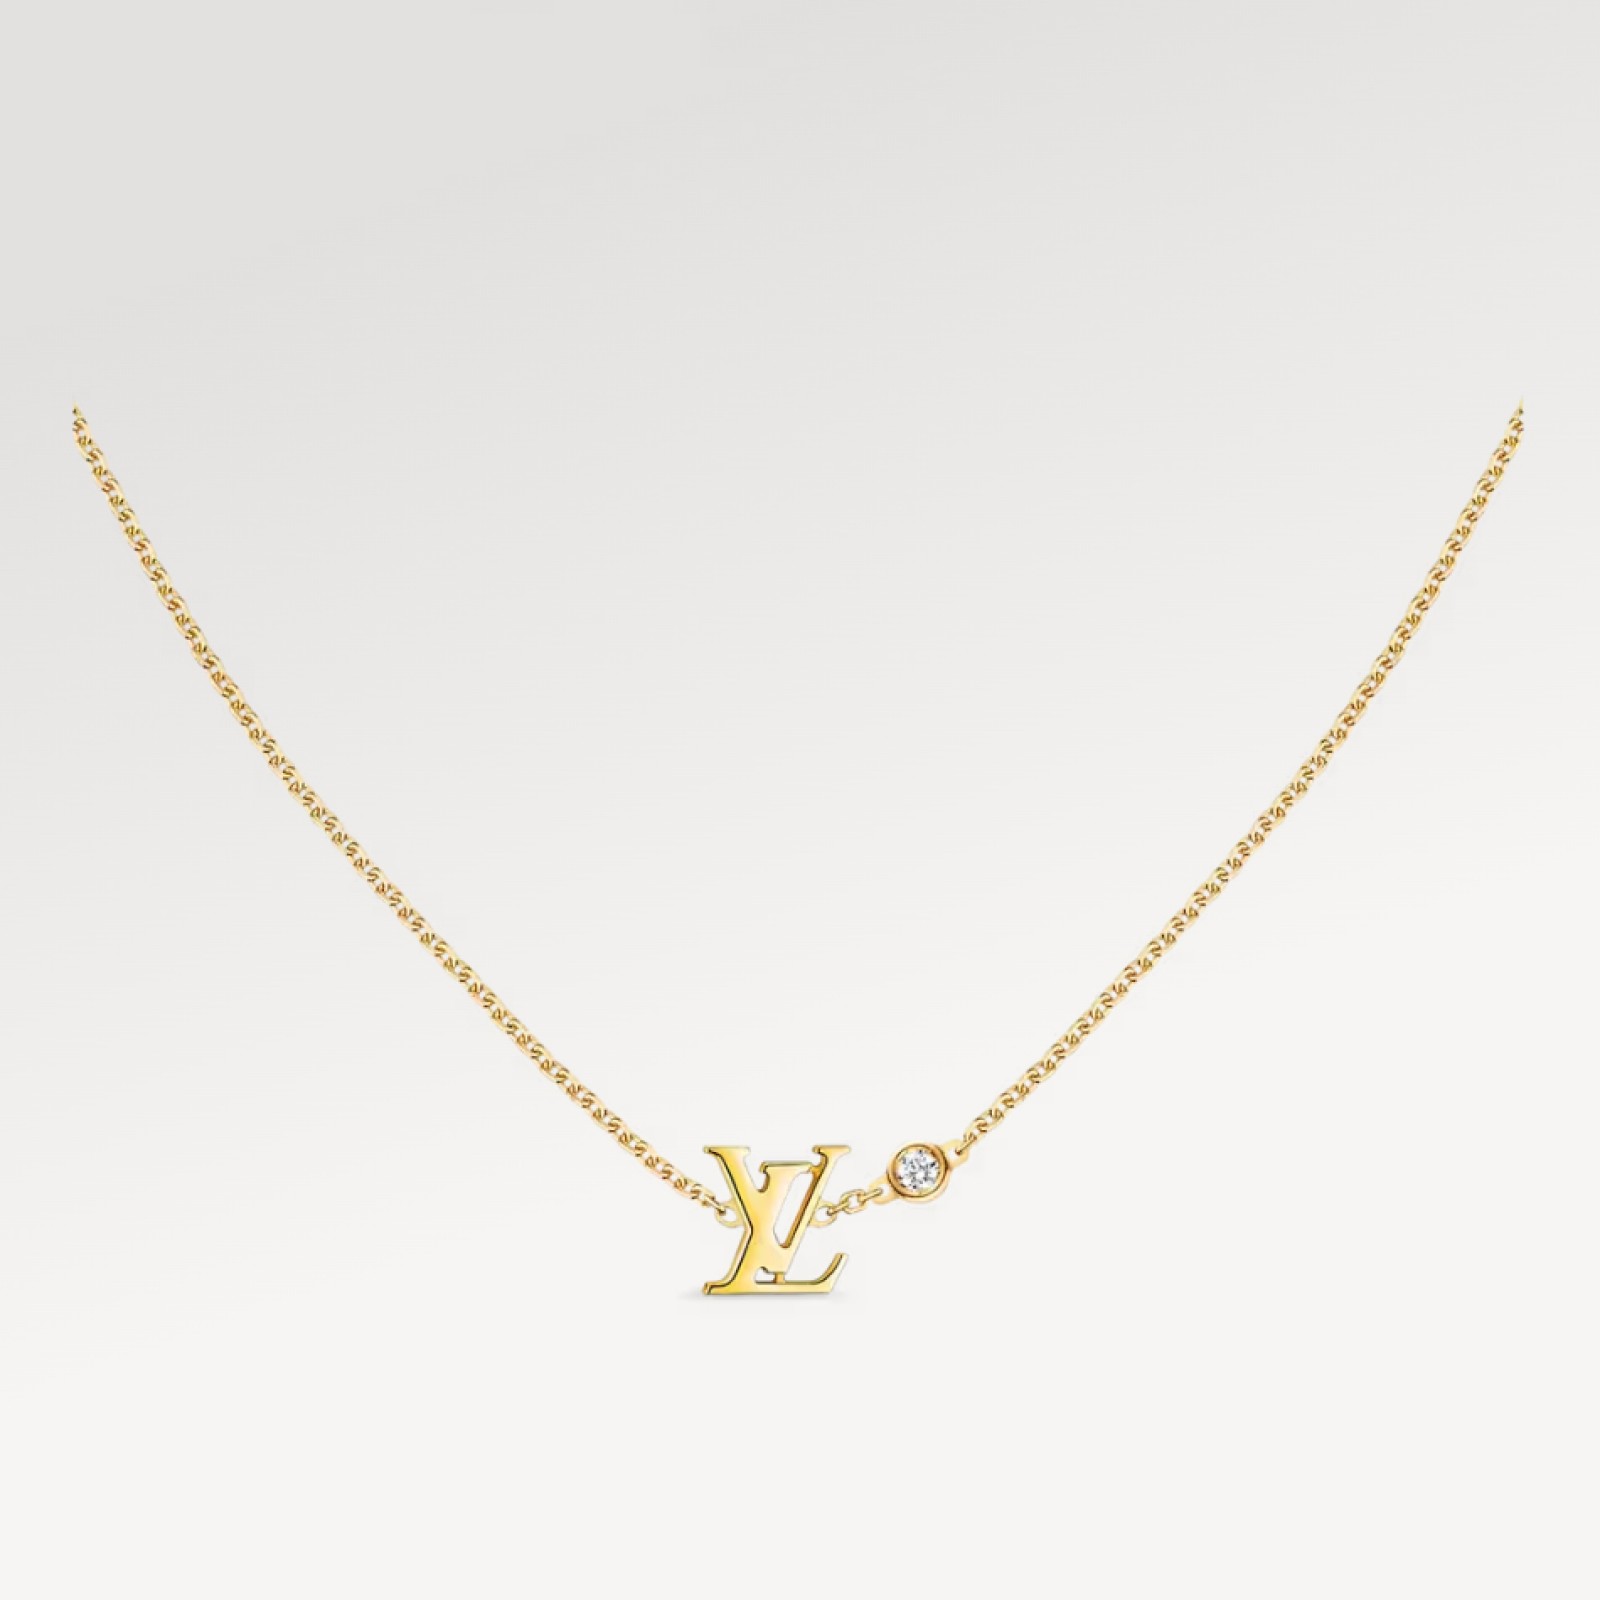 Idylle Blossom LV Pendant, Yellow gold and diamond